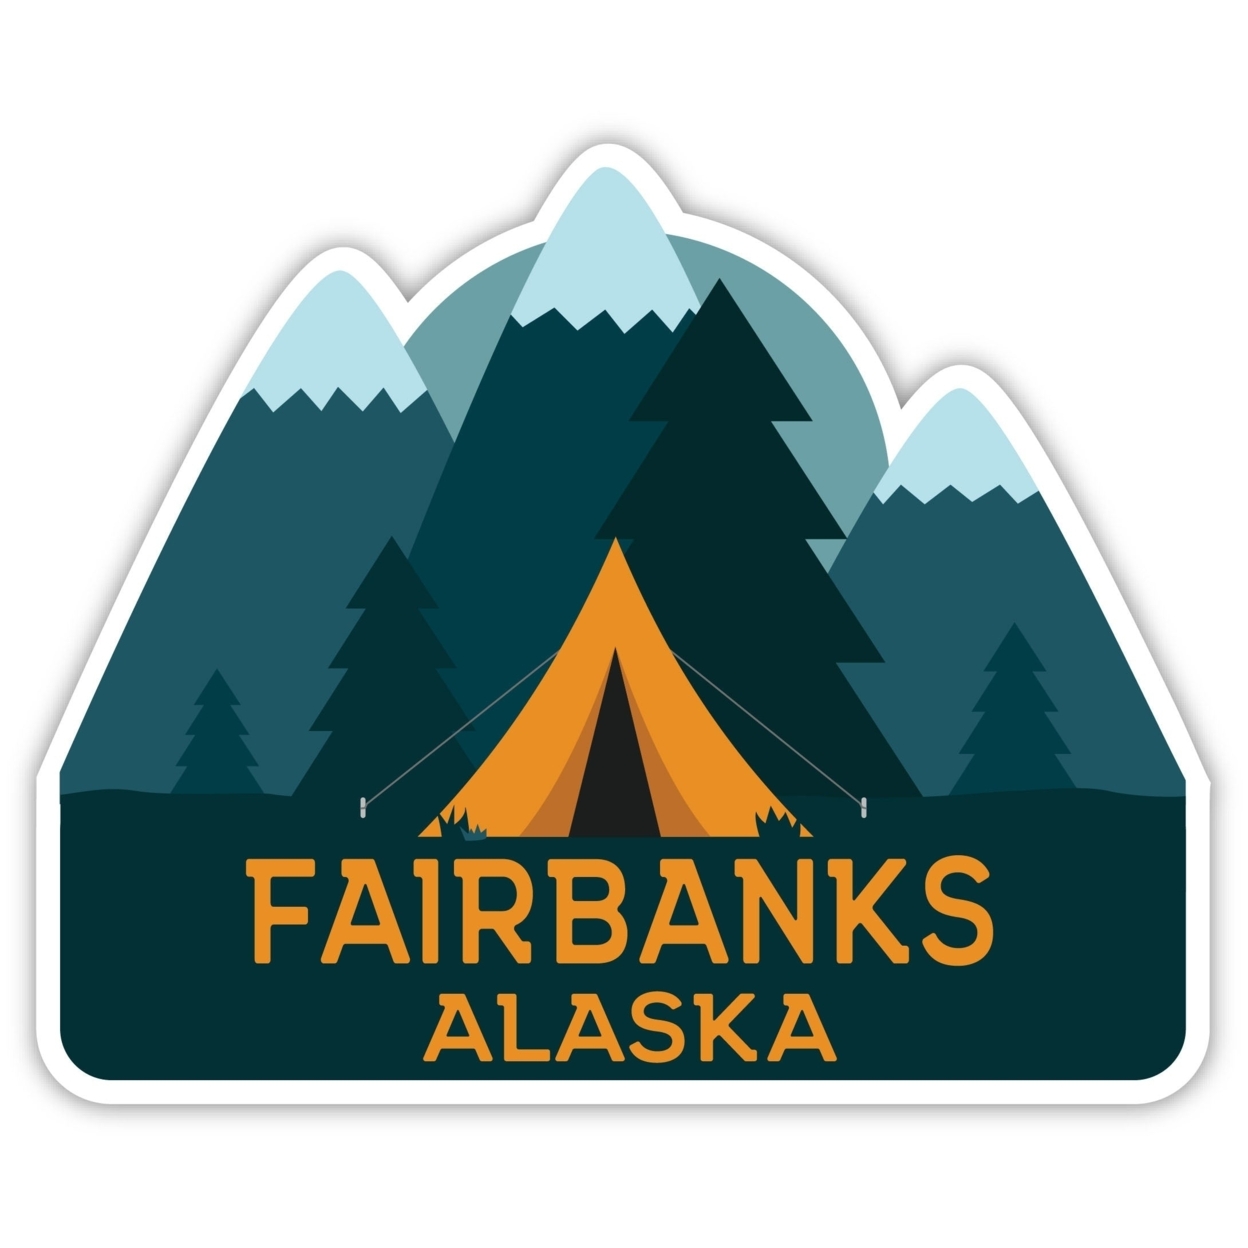 Fairbanks Alaska Souvenir Decorative Stickers (Choose Theme And Size) - 4-Pack, 4-Inch, Tent